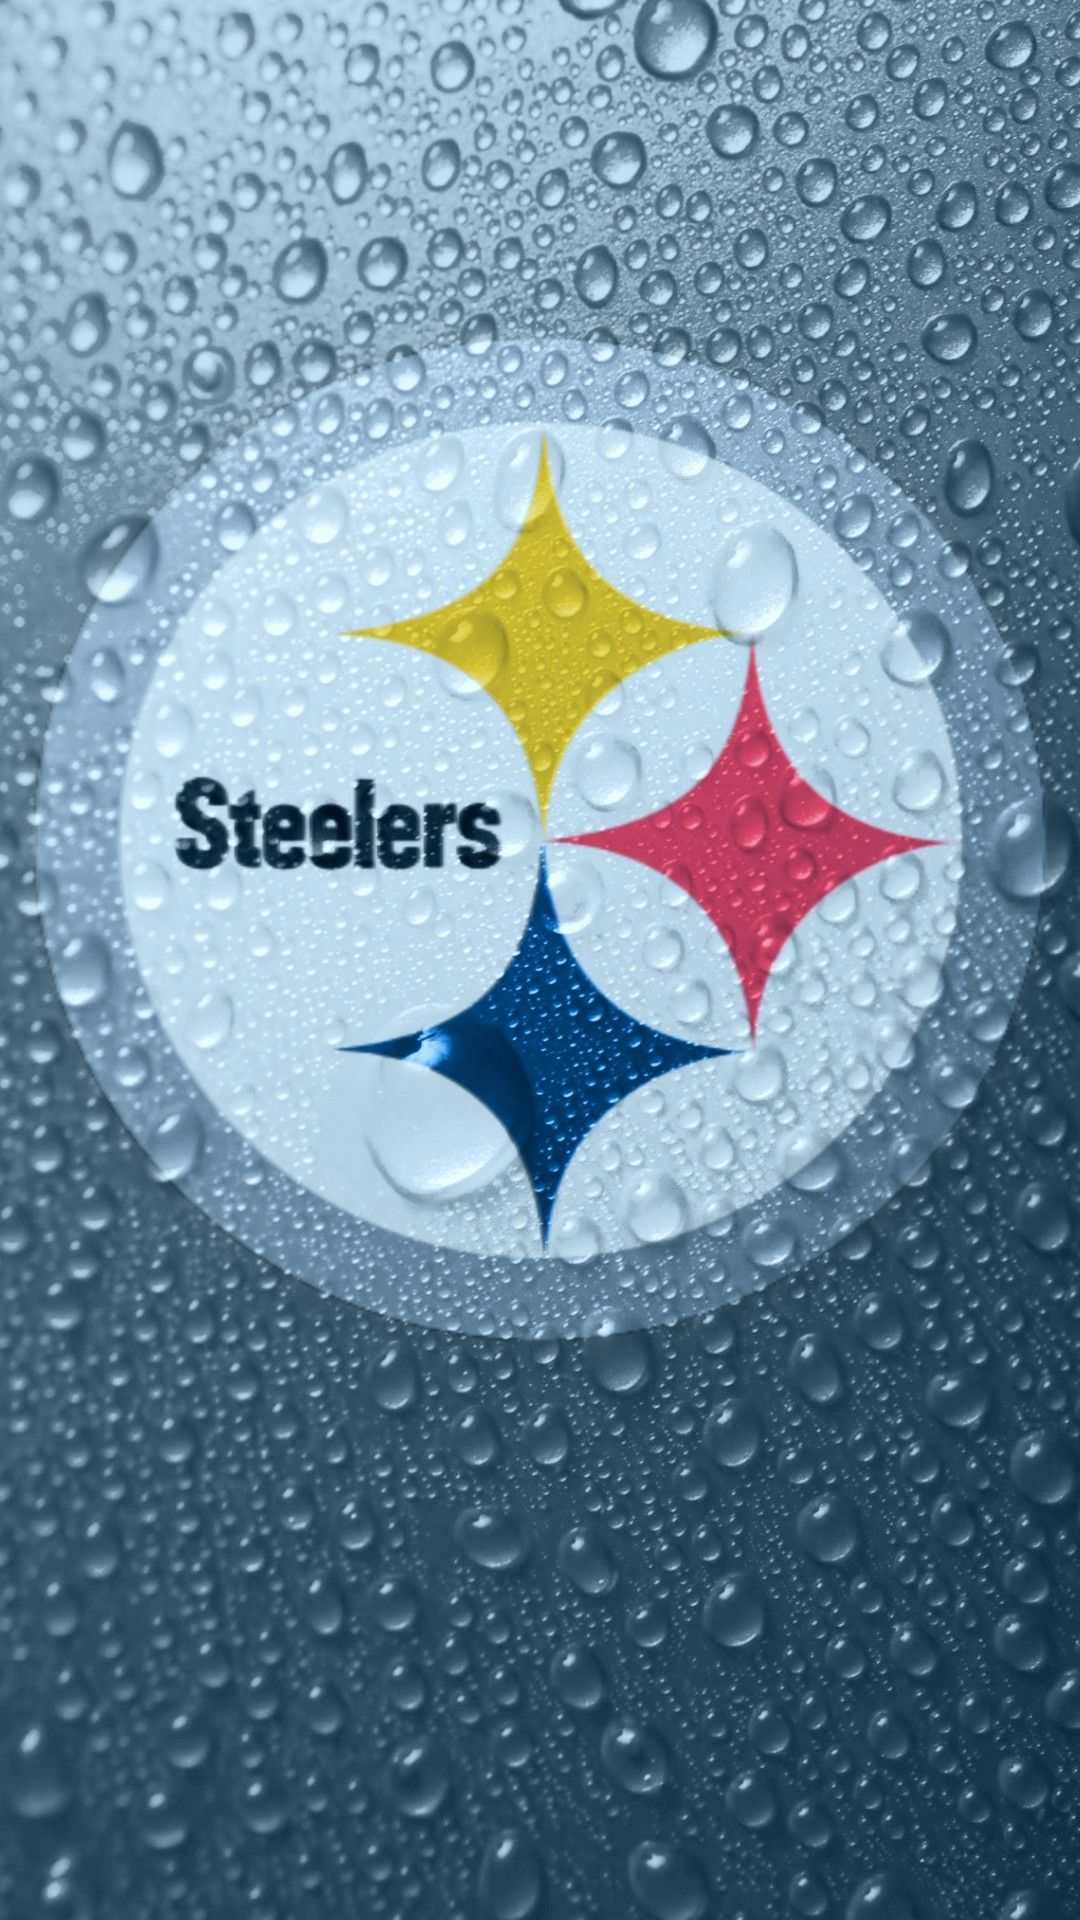 Steelers Background. Pittsburgh steelers wallpaper, Steelers, Pittsburgh steelers football